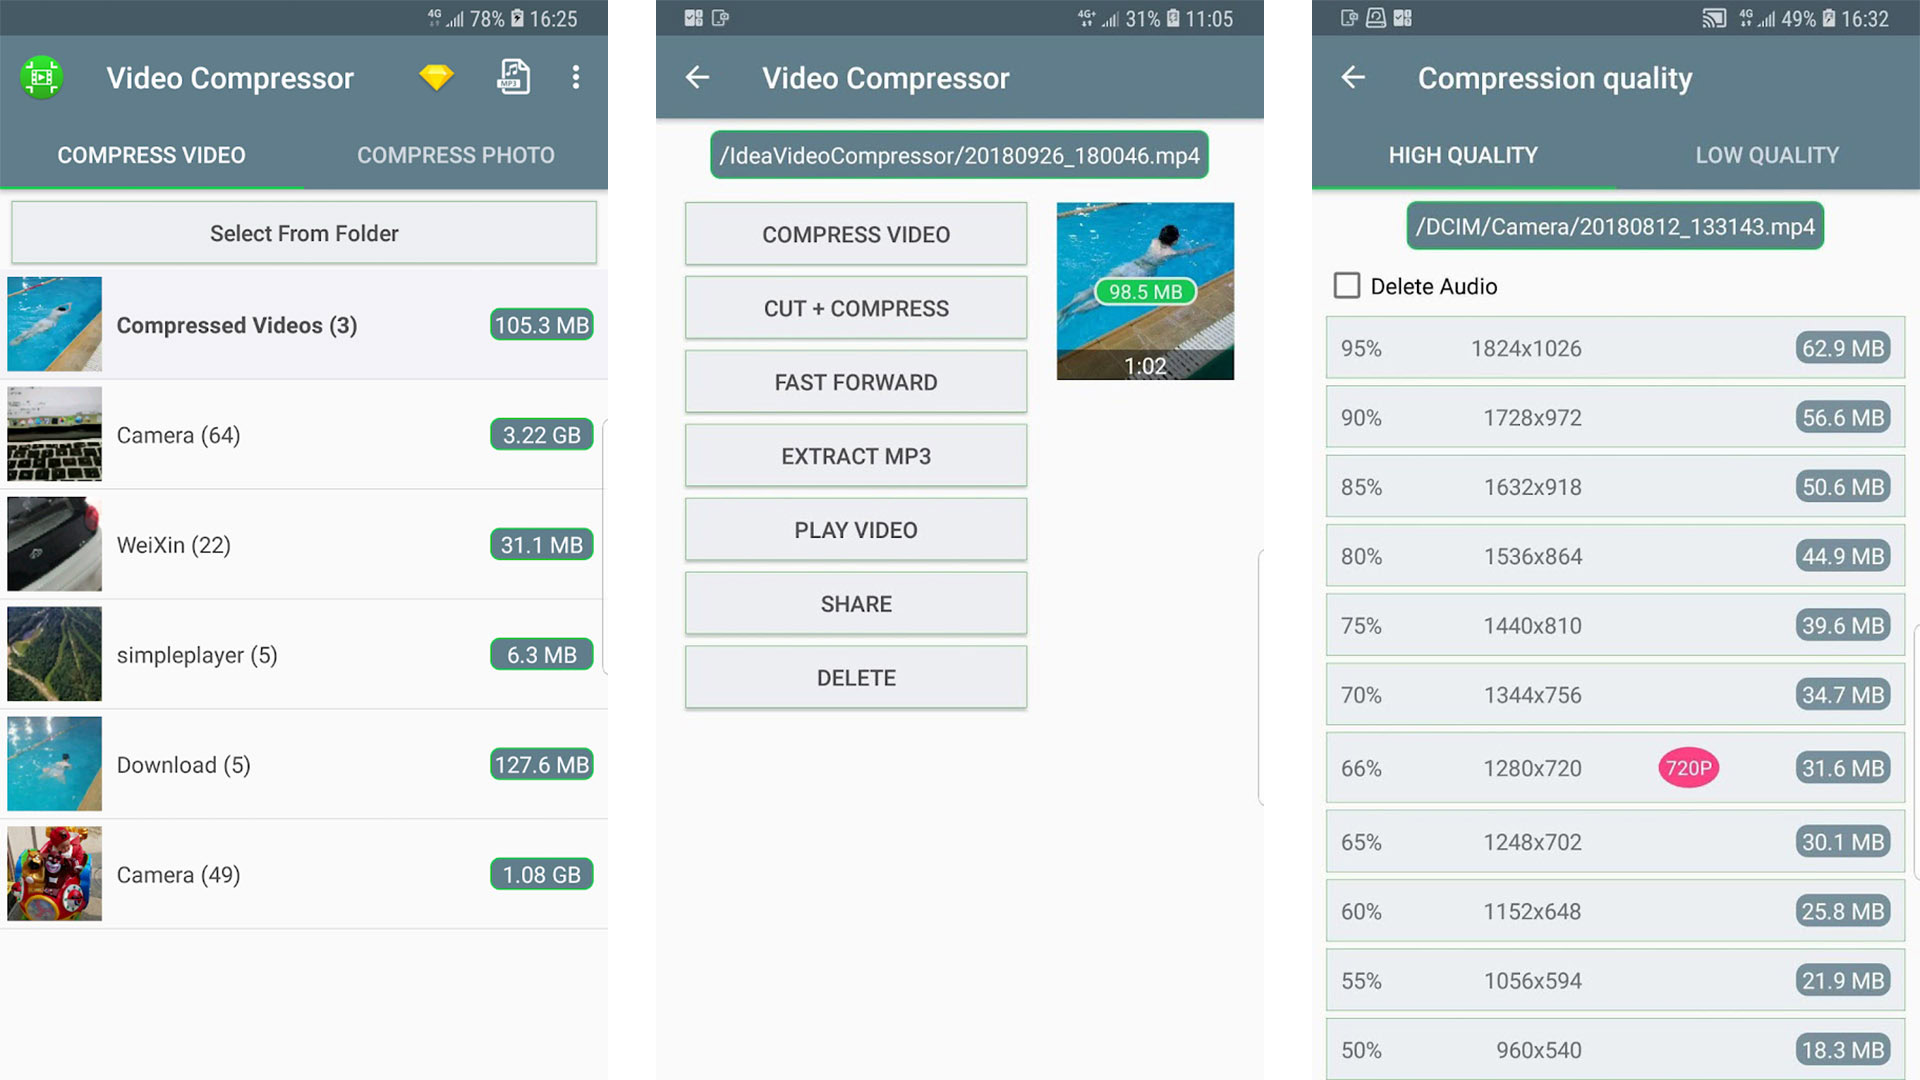 Video Compressor screenshot 2022